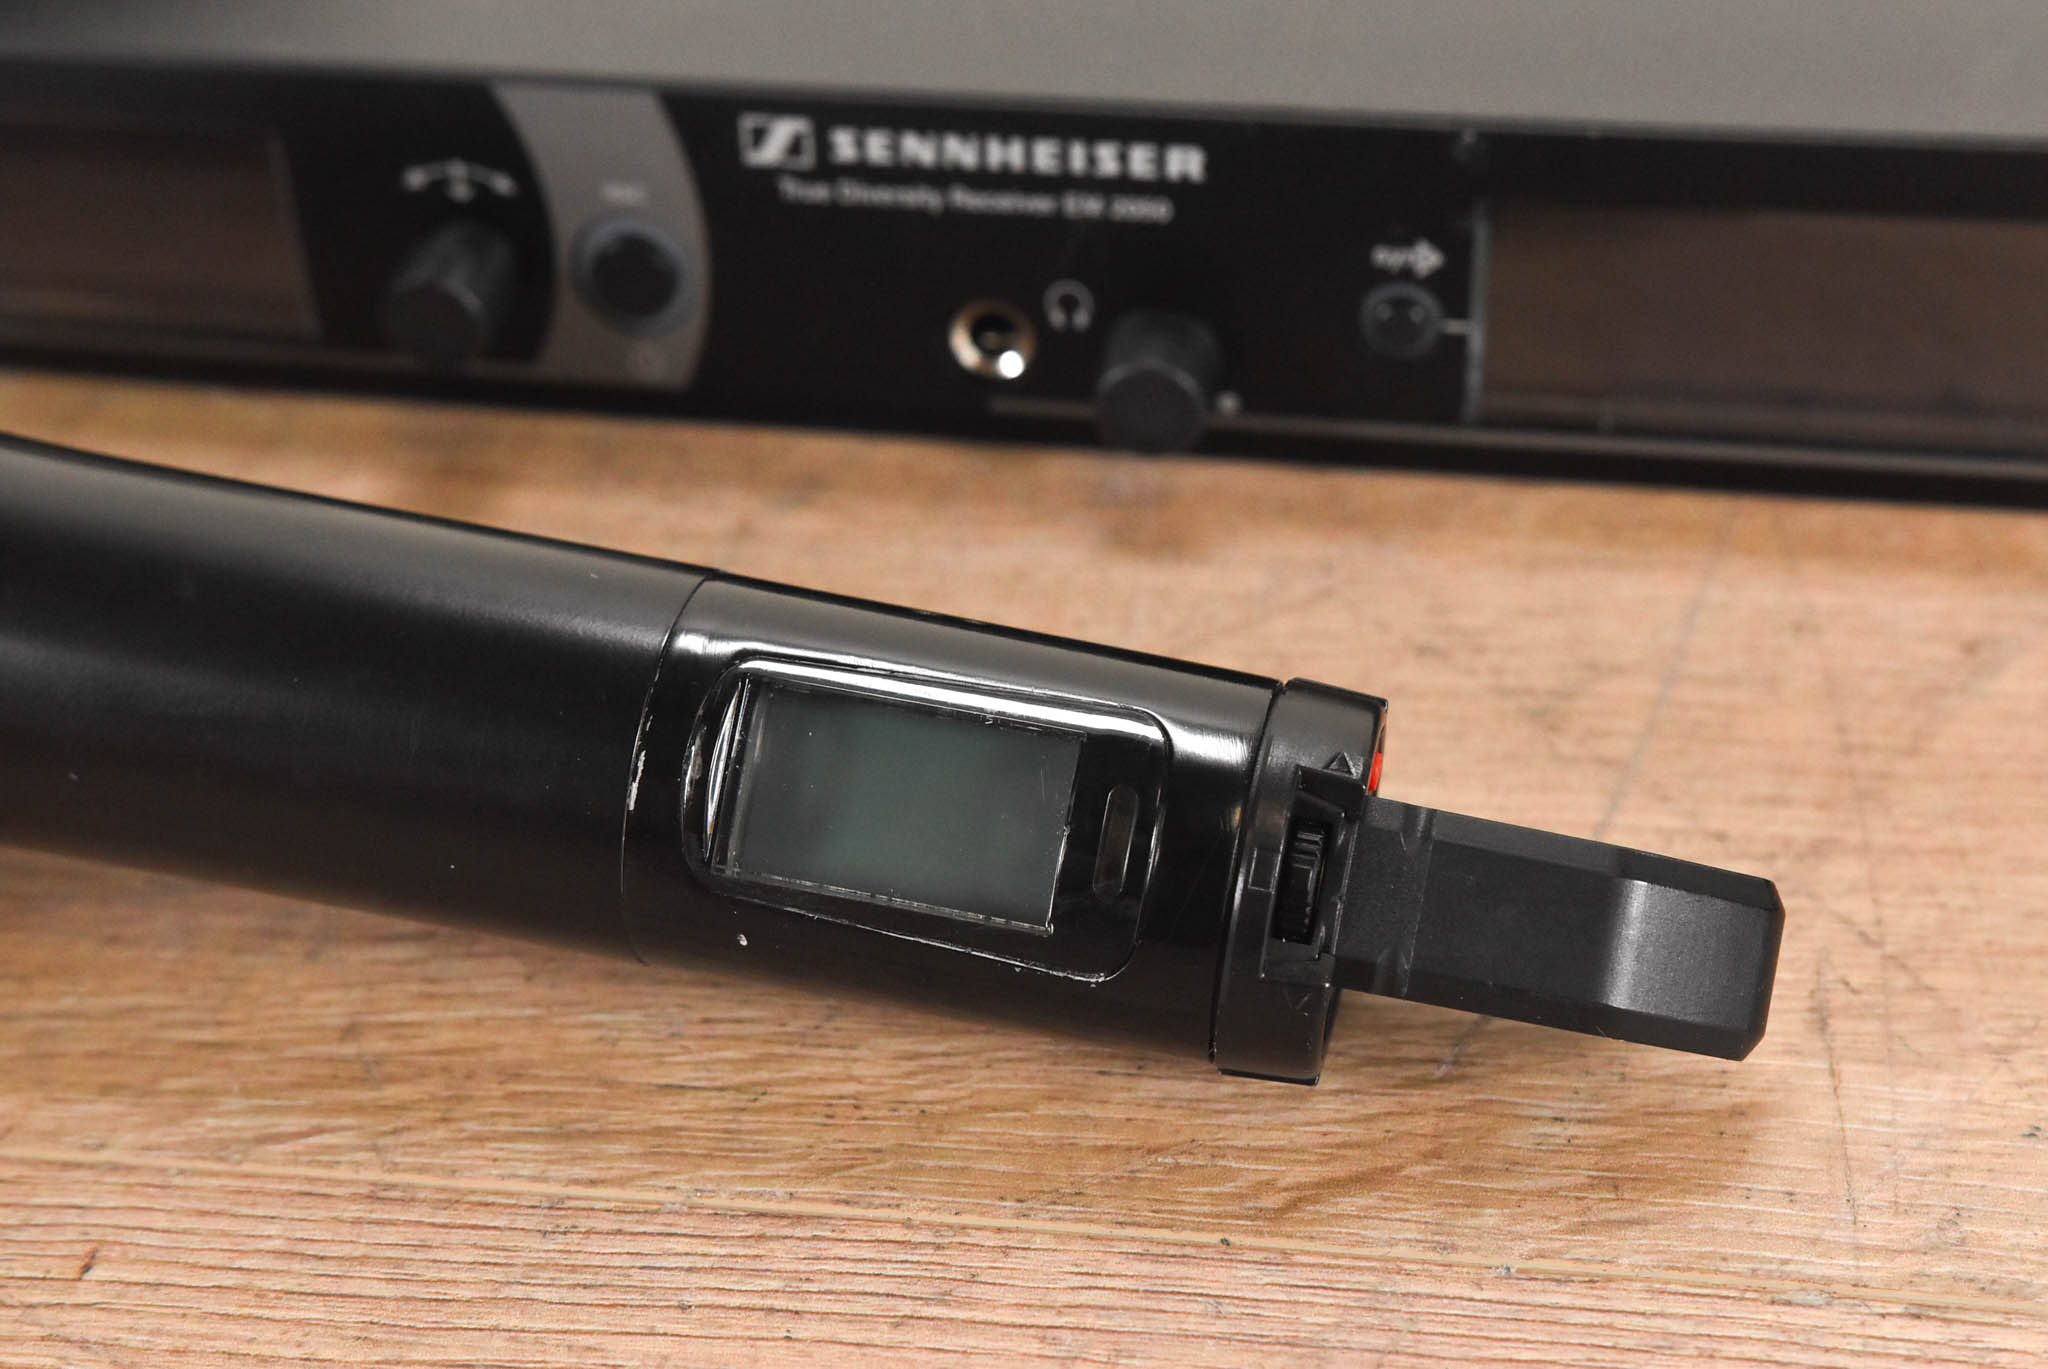 Sennheiser EM 2050 Wireless Receiver w/ Handheld and Beltpack 558-626MHz